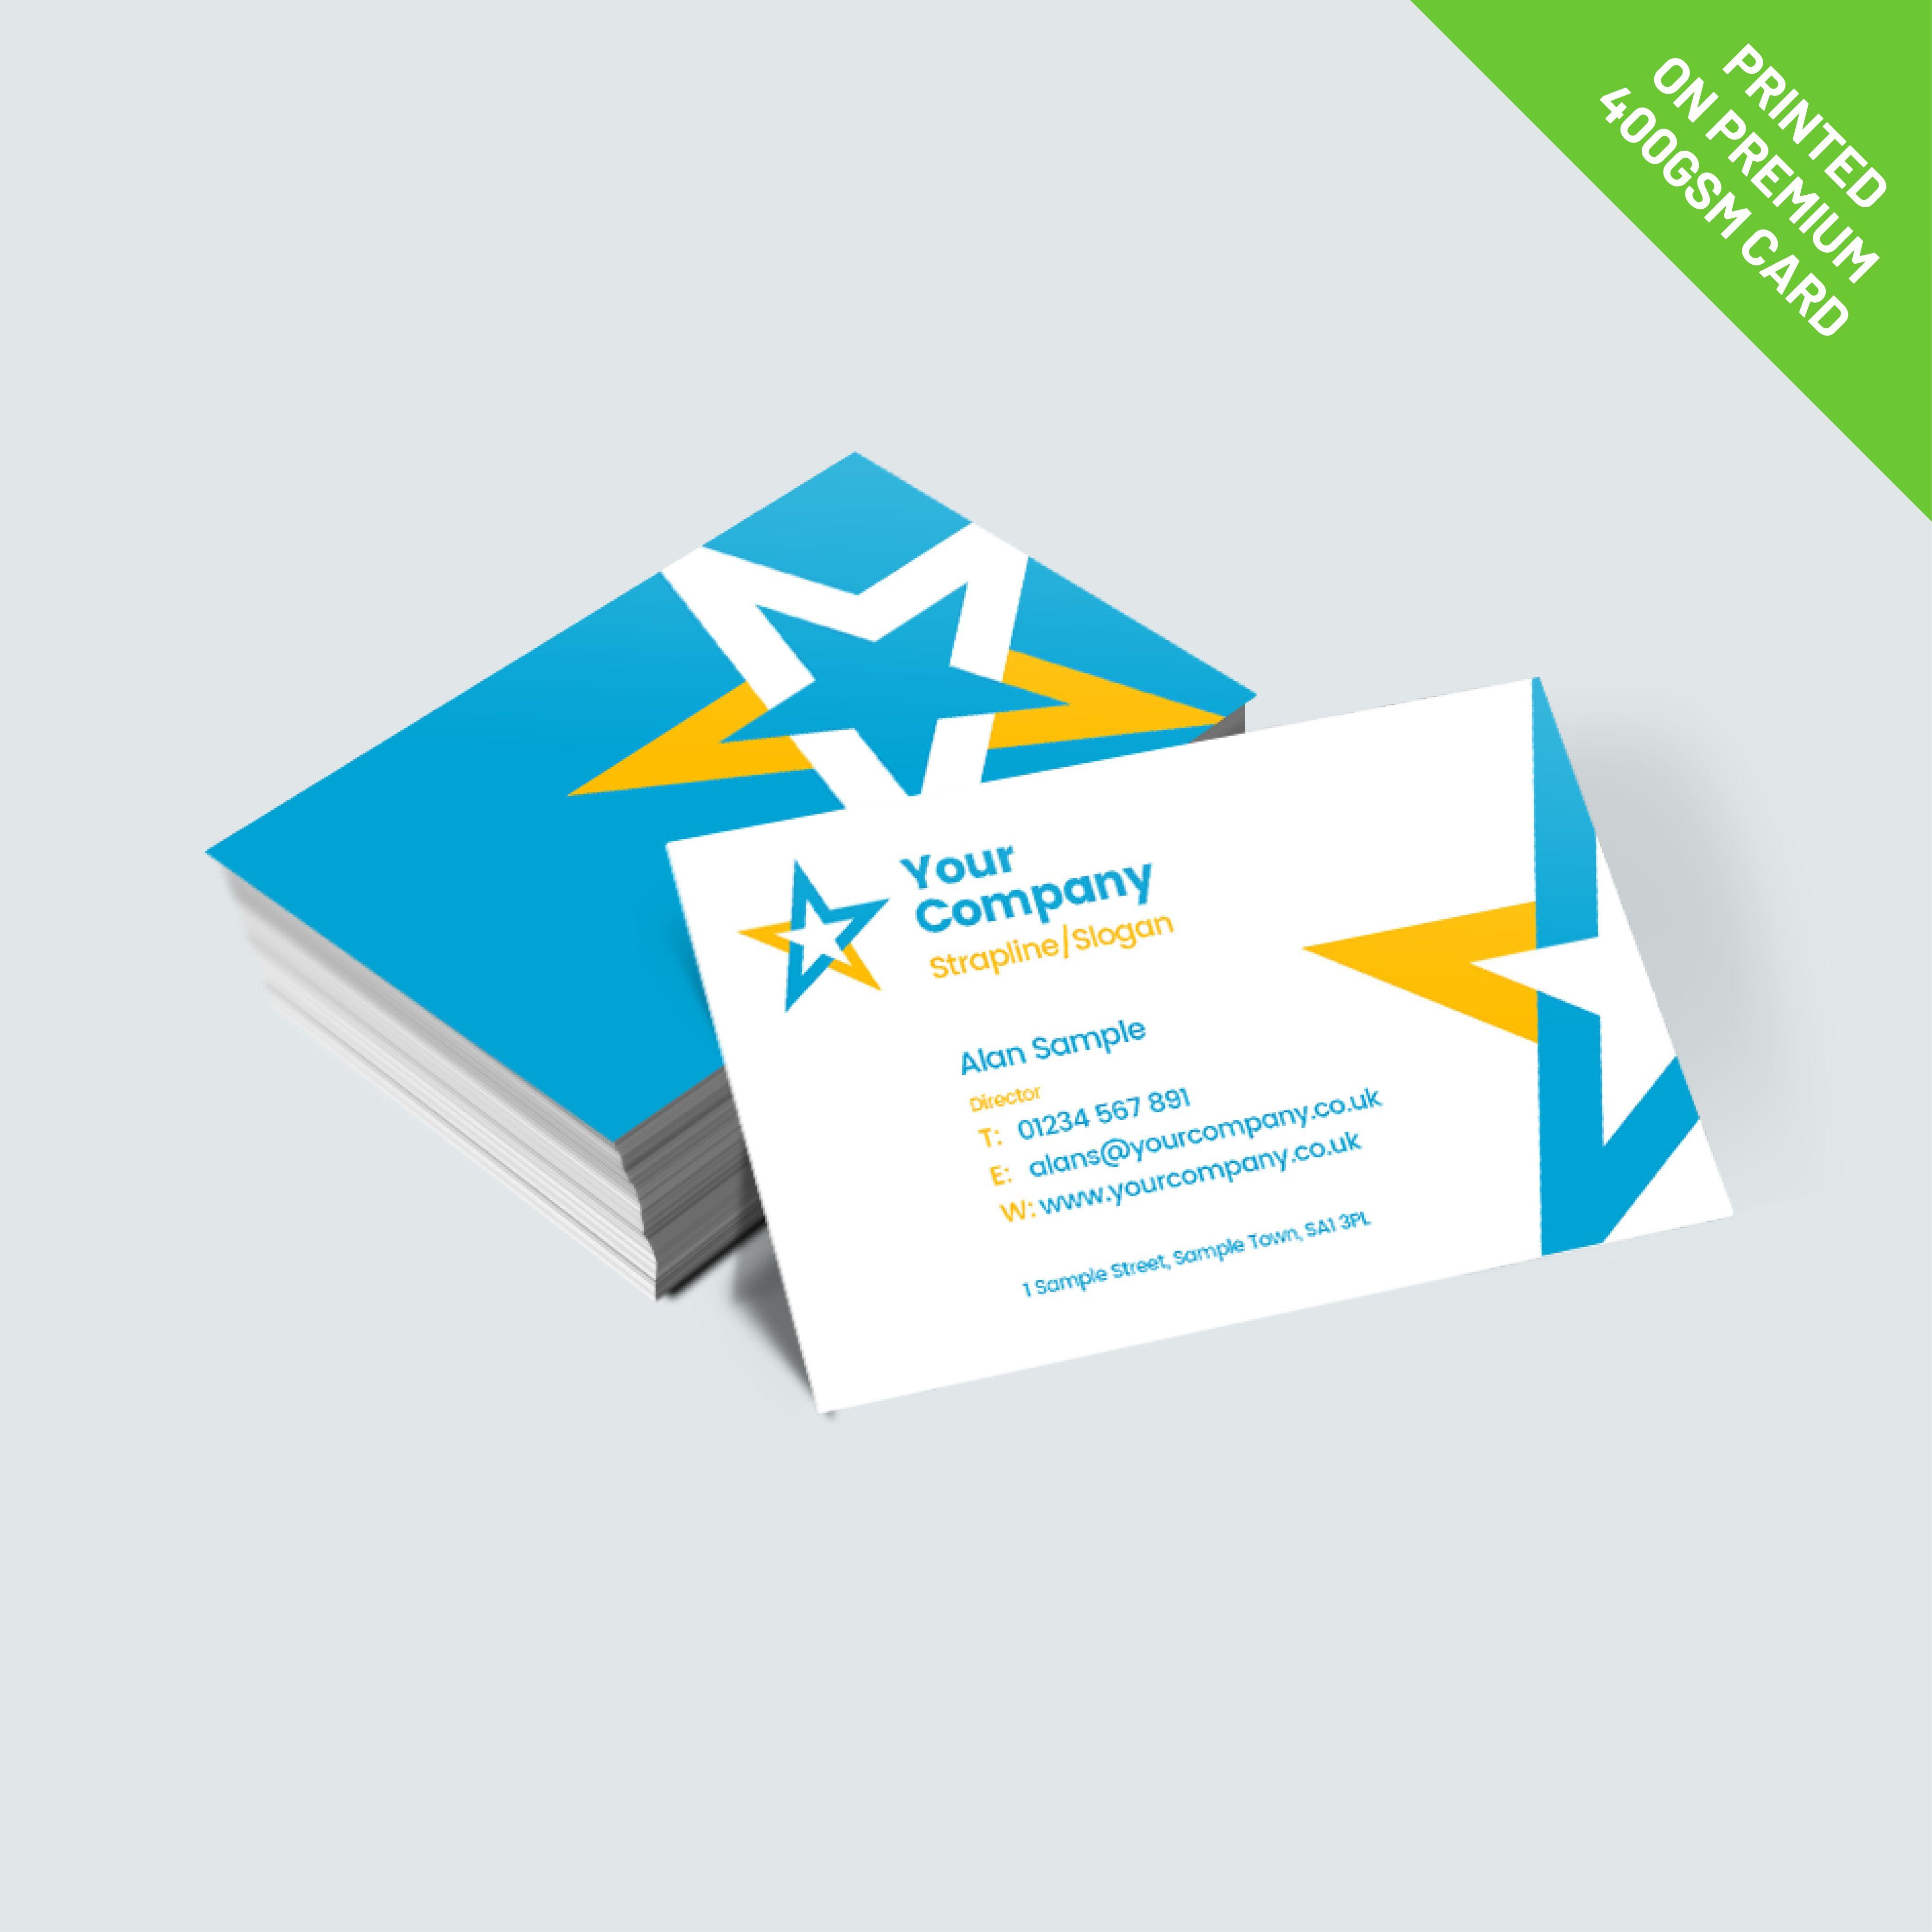 Printing Business Logo - Business Card Printing. Small Business Logos